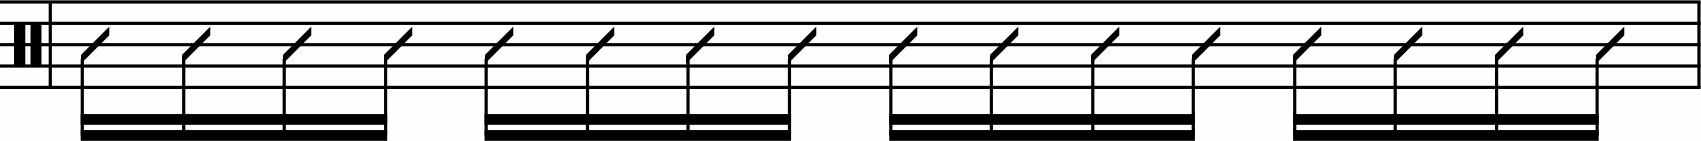 Sixteenth-note rhythm example.